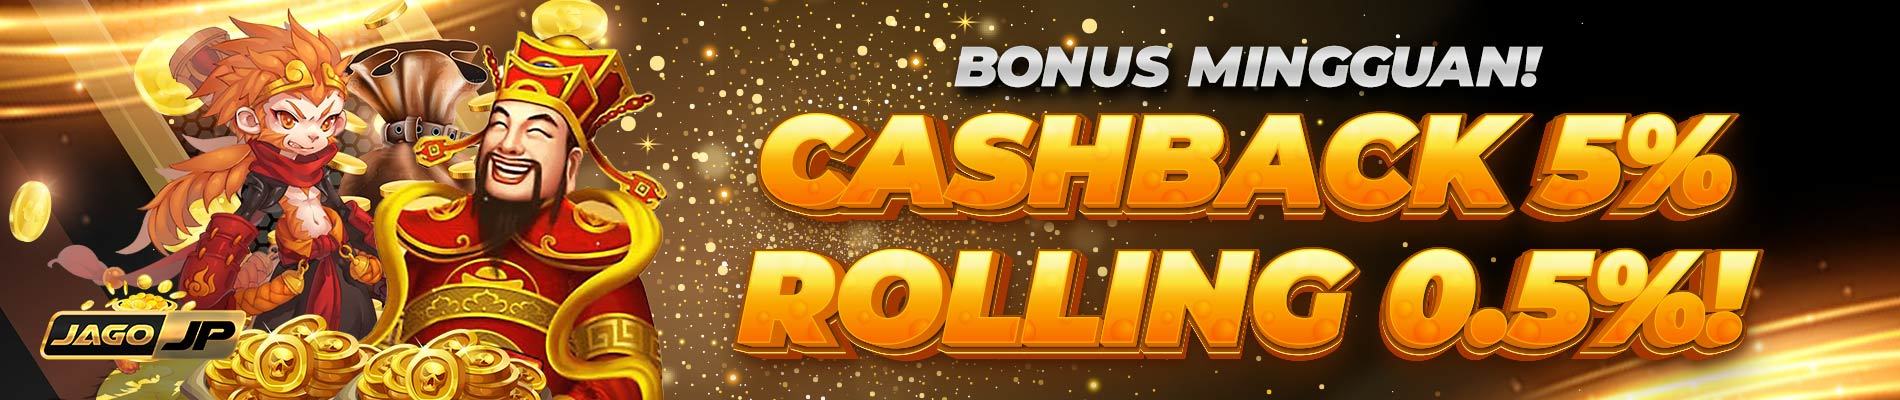 JAGOJP Judi Online Bonus Mingguan Cashback Rolling